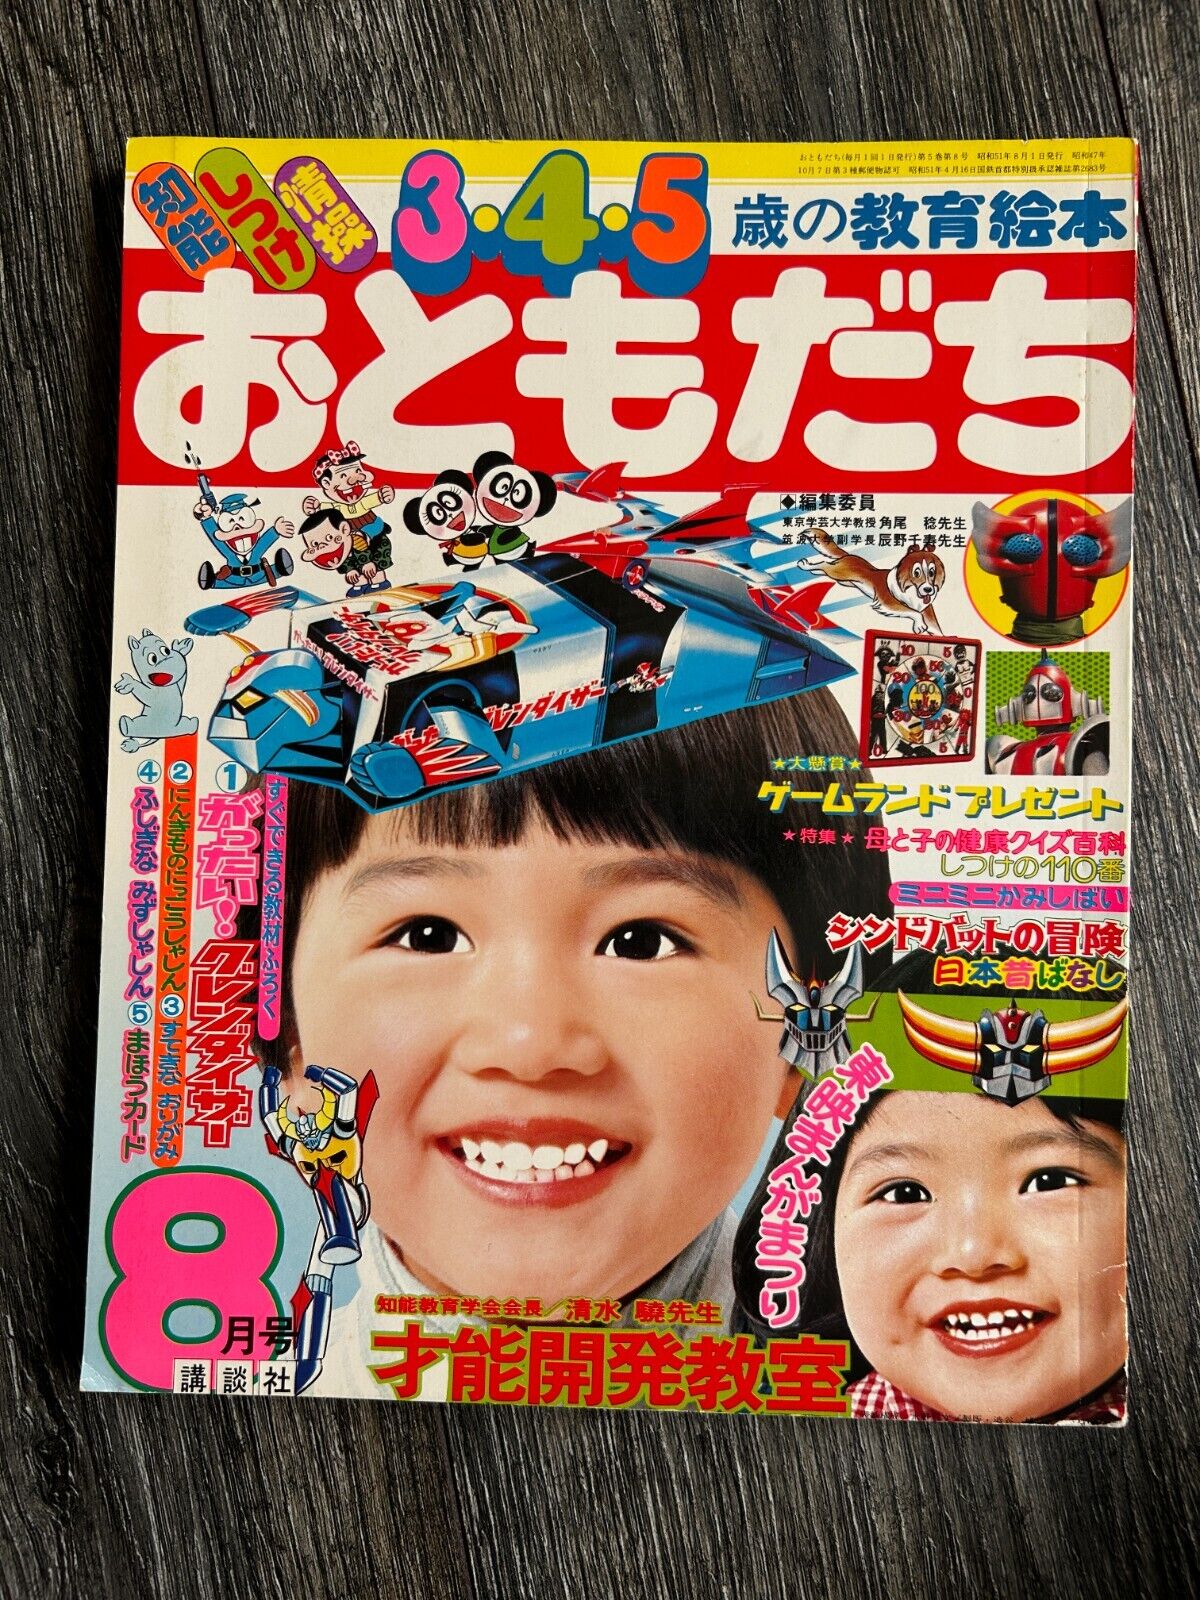 OTOMODACHI Elementary School Magazine Aug 1976 All Inserts Manga Anime Tokusatsu